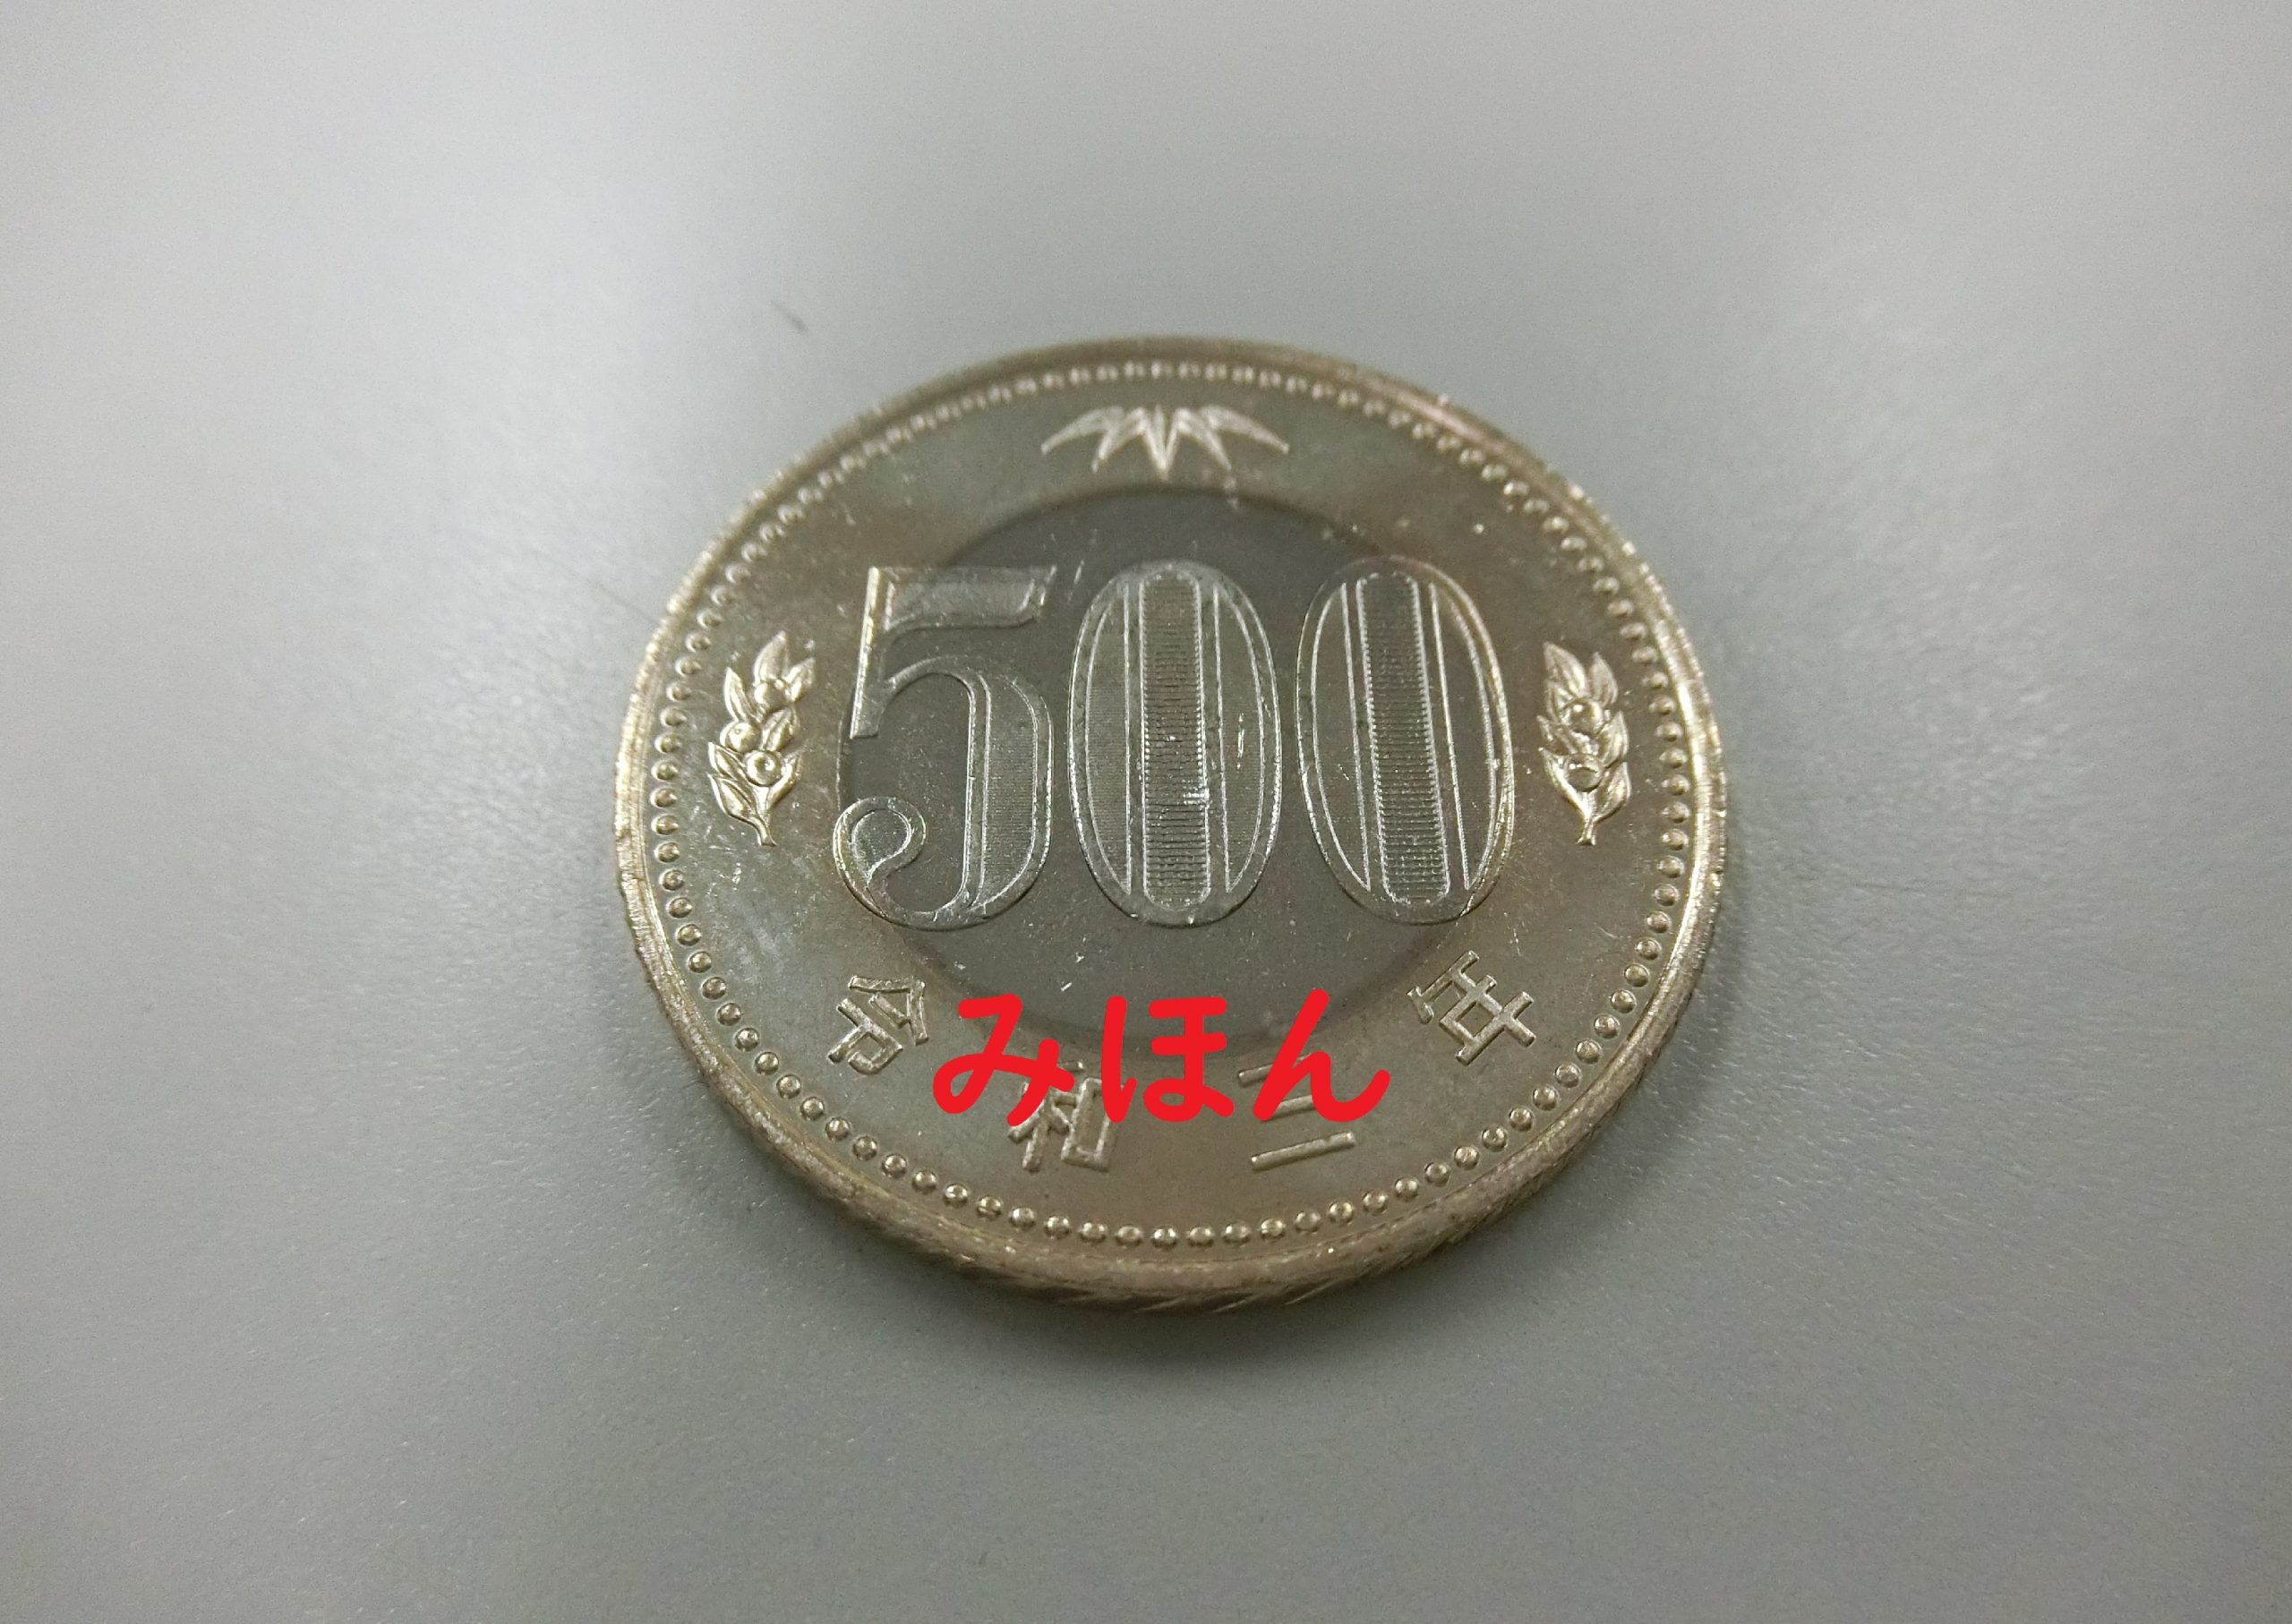 New 500yen coins were released!